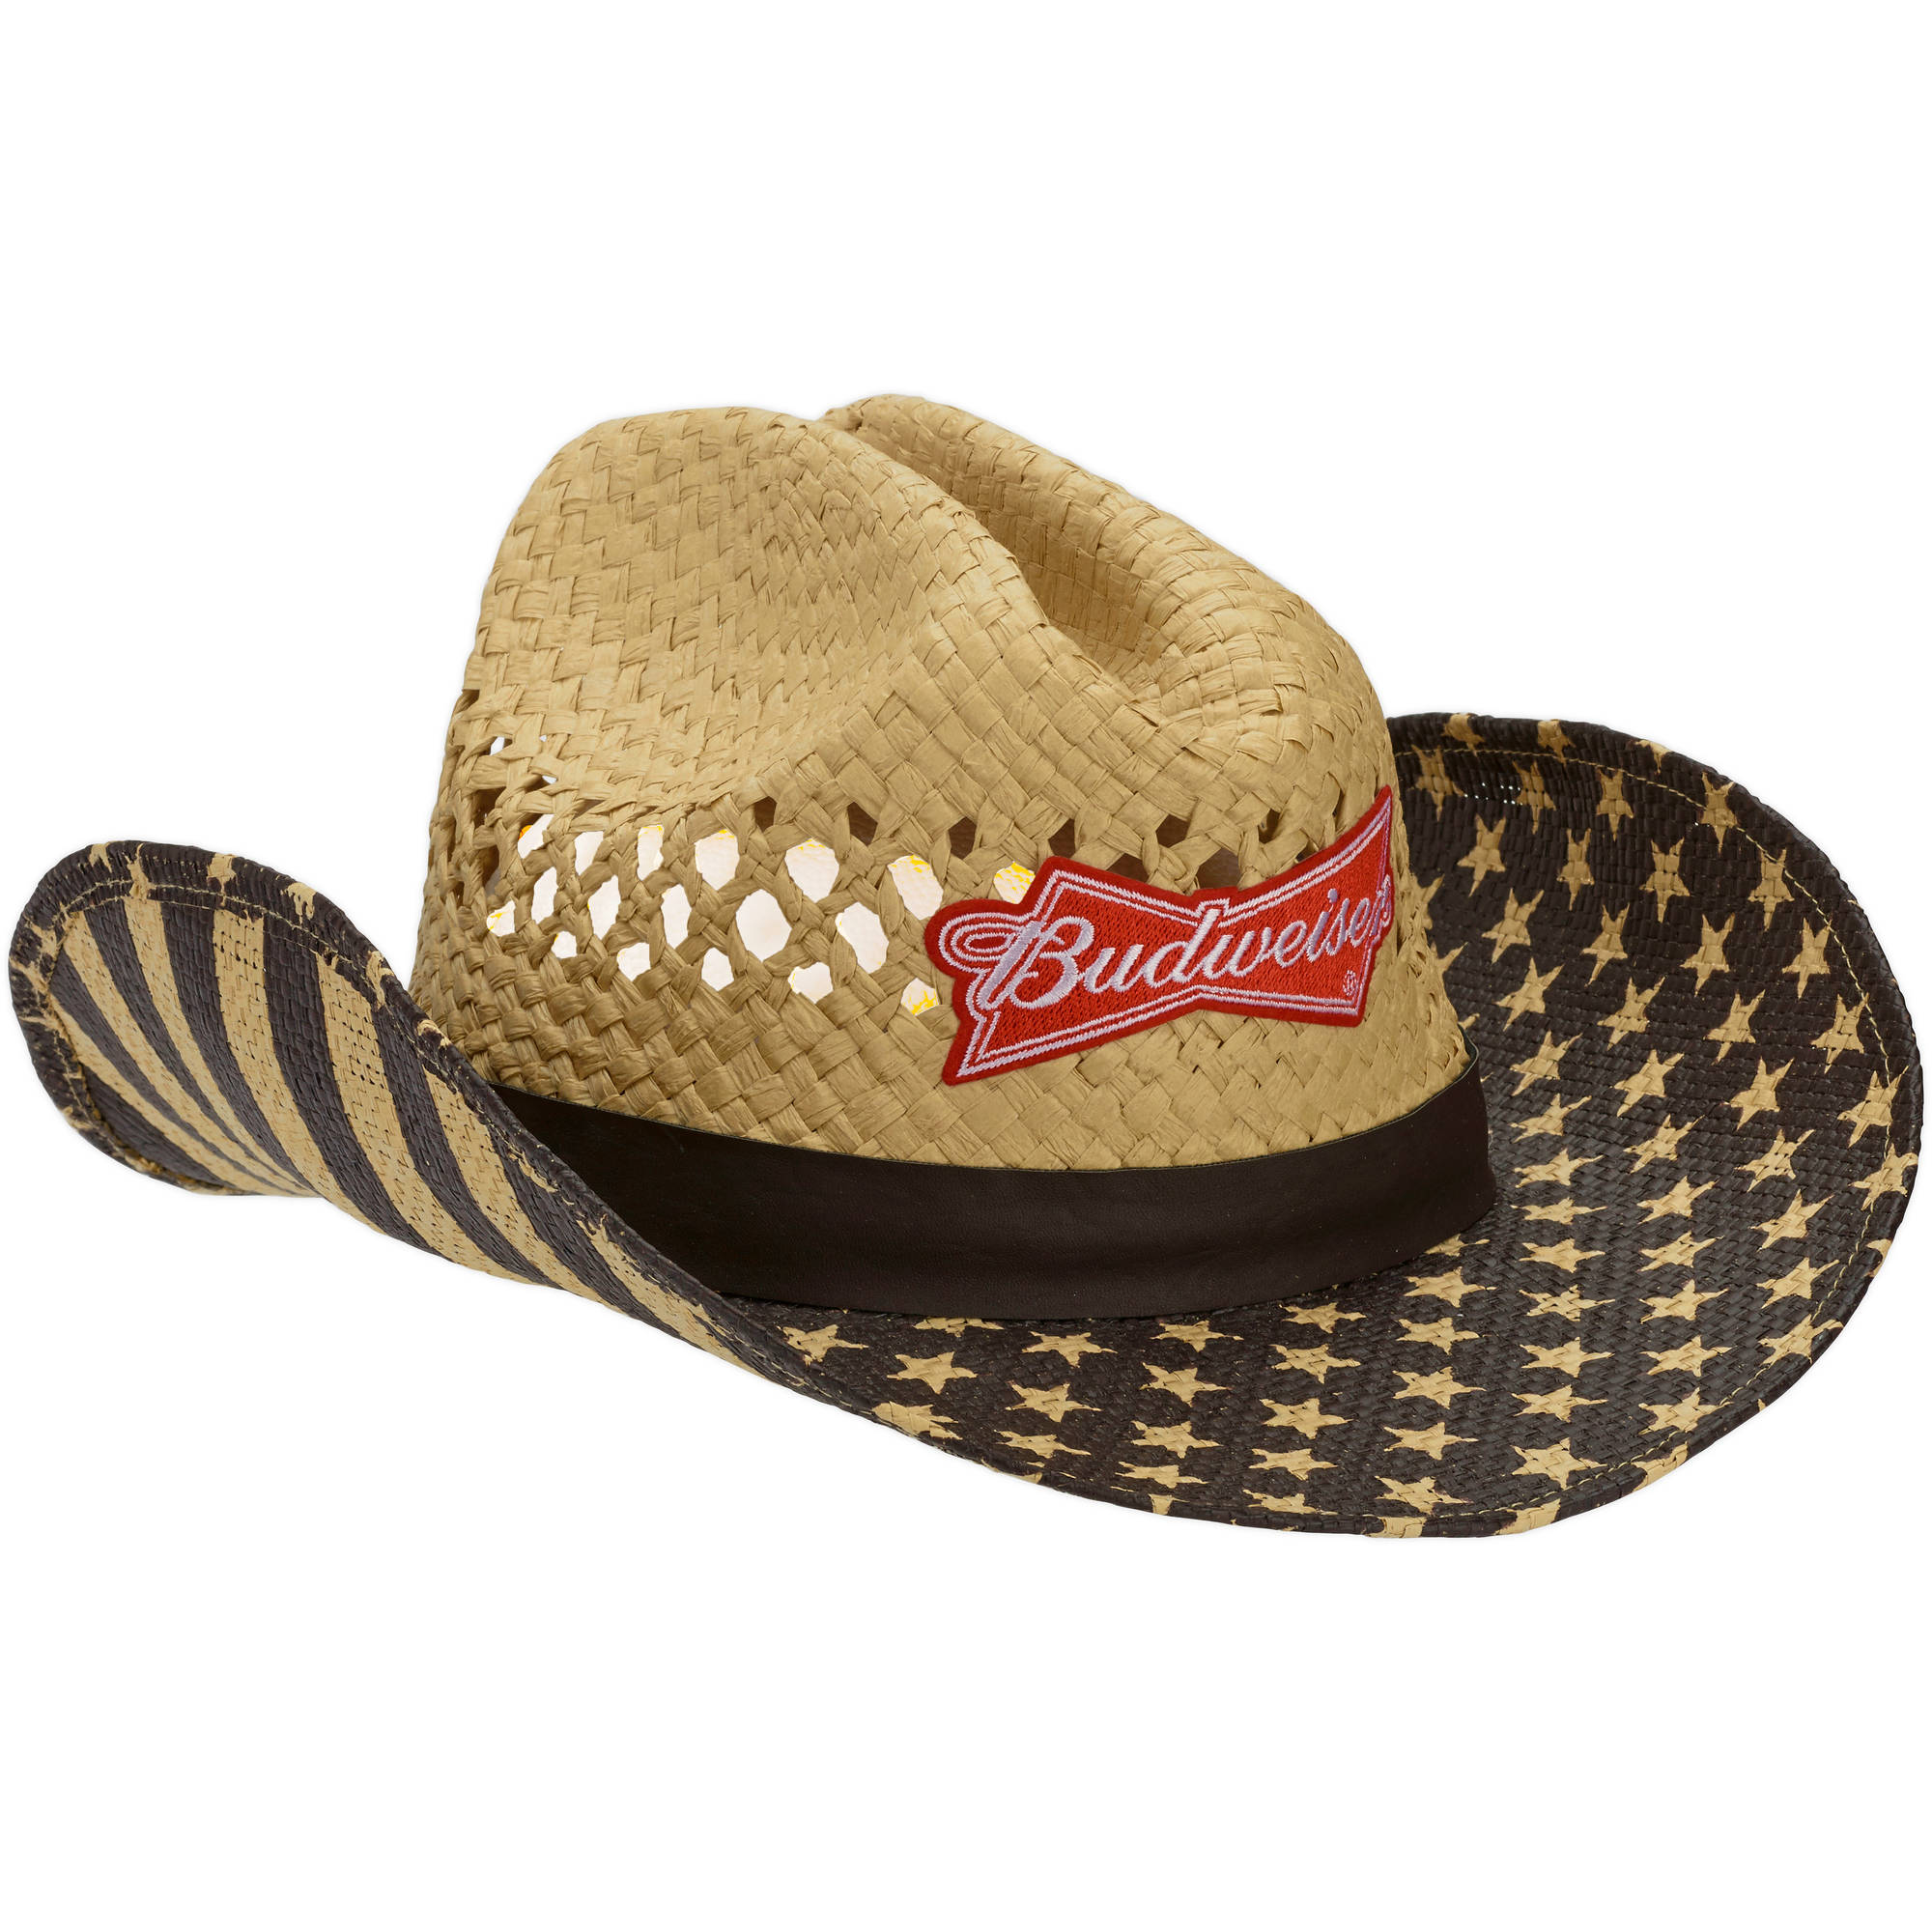 Men's Budweiser Cowboy Hat - image 1 of 1